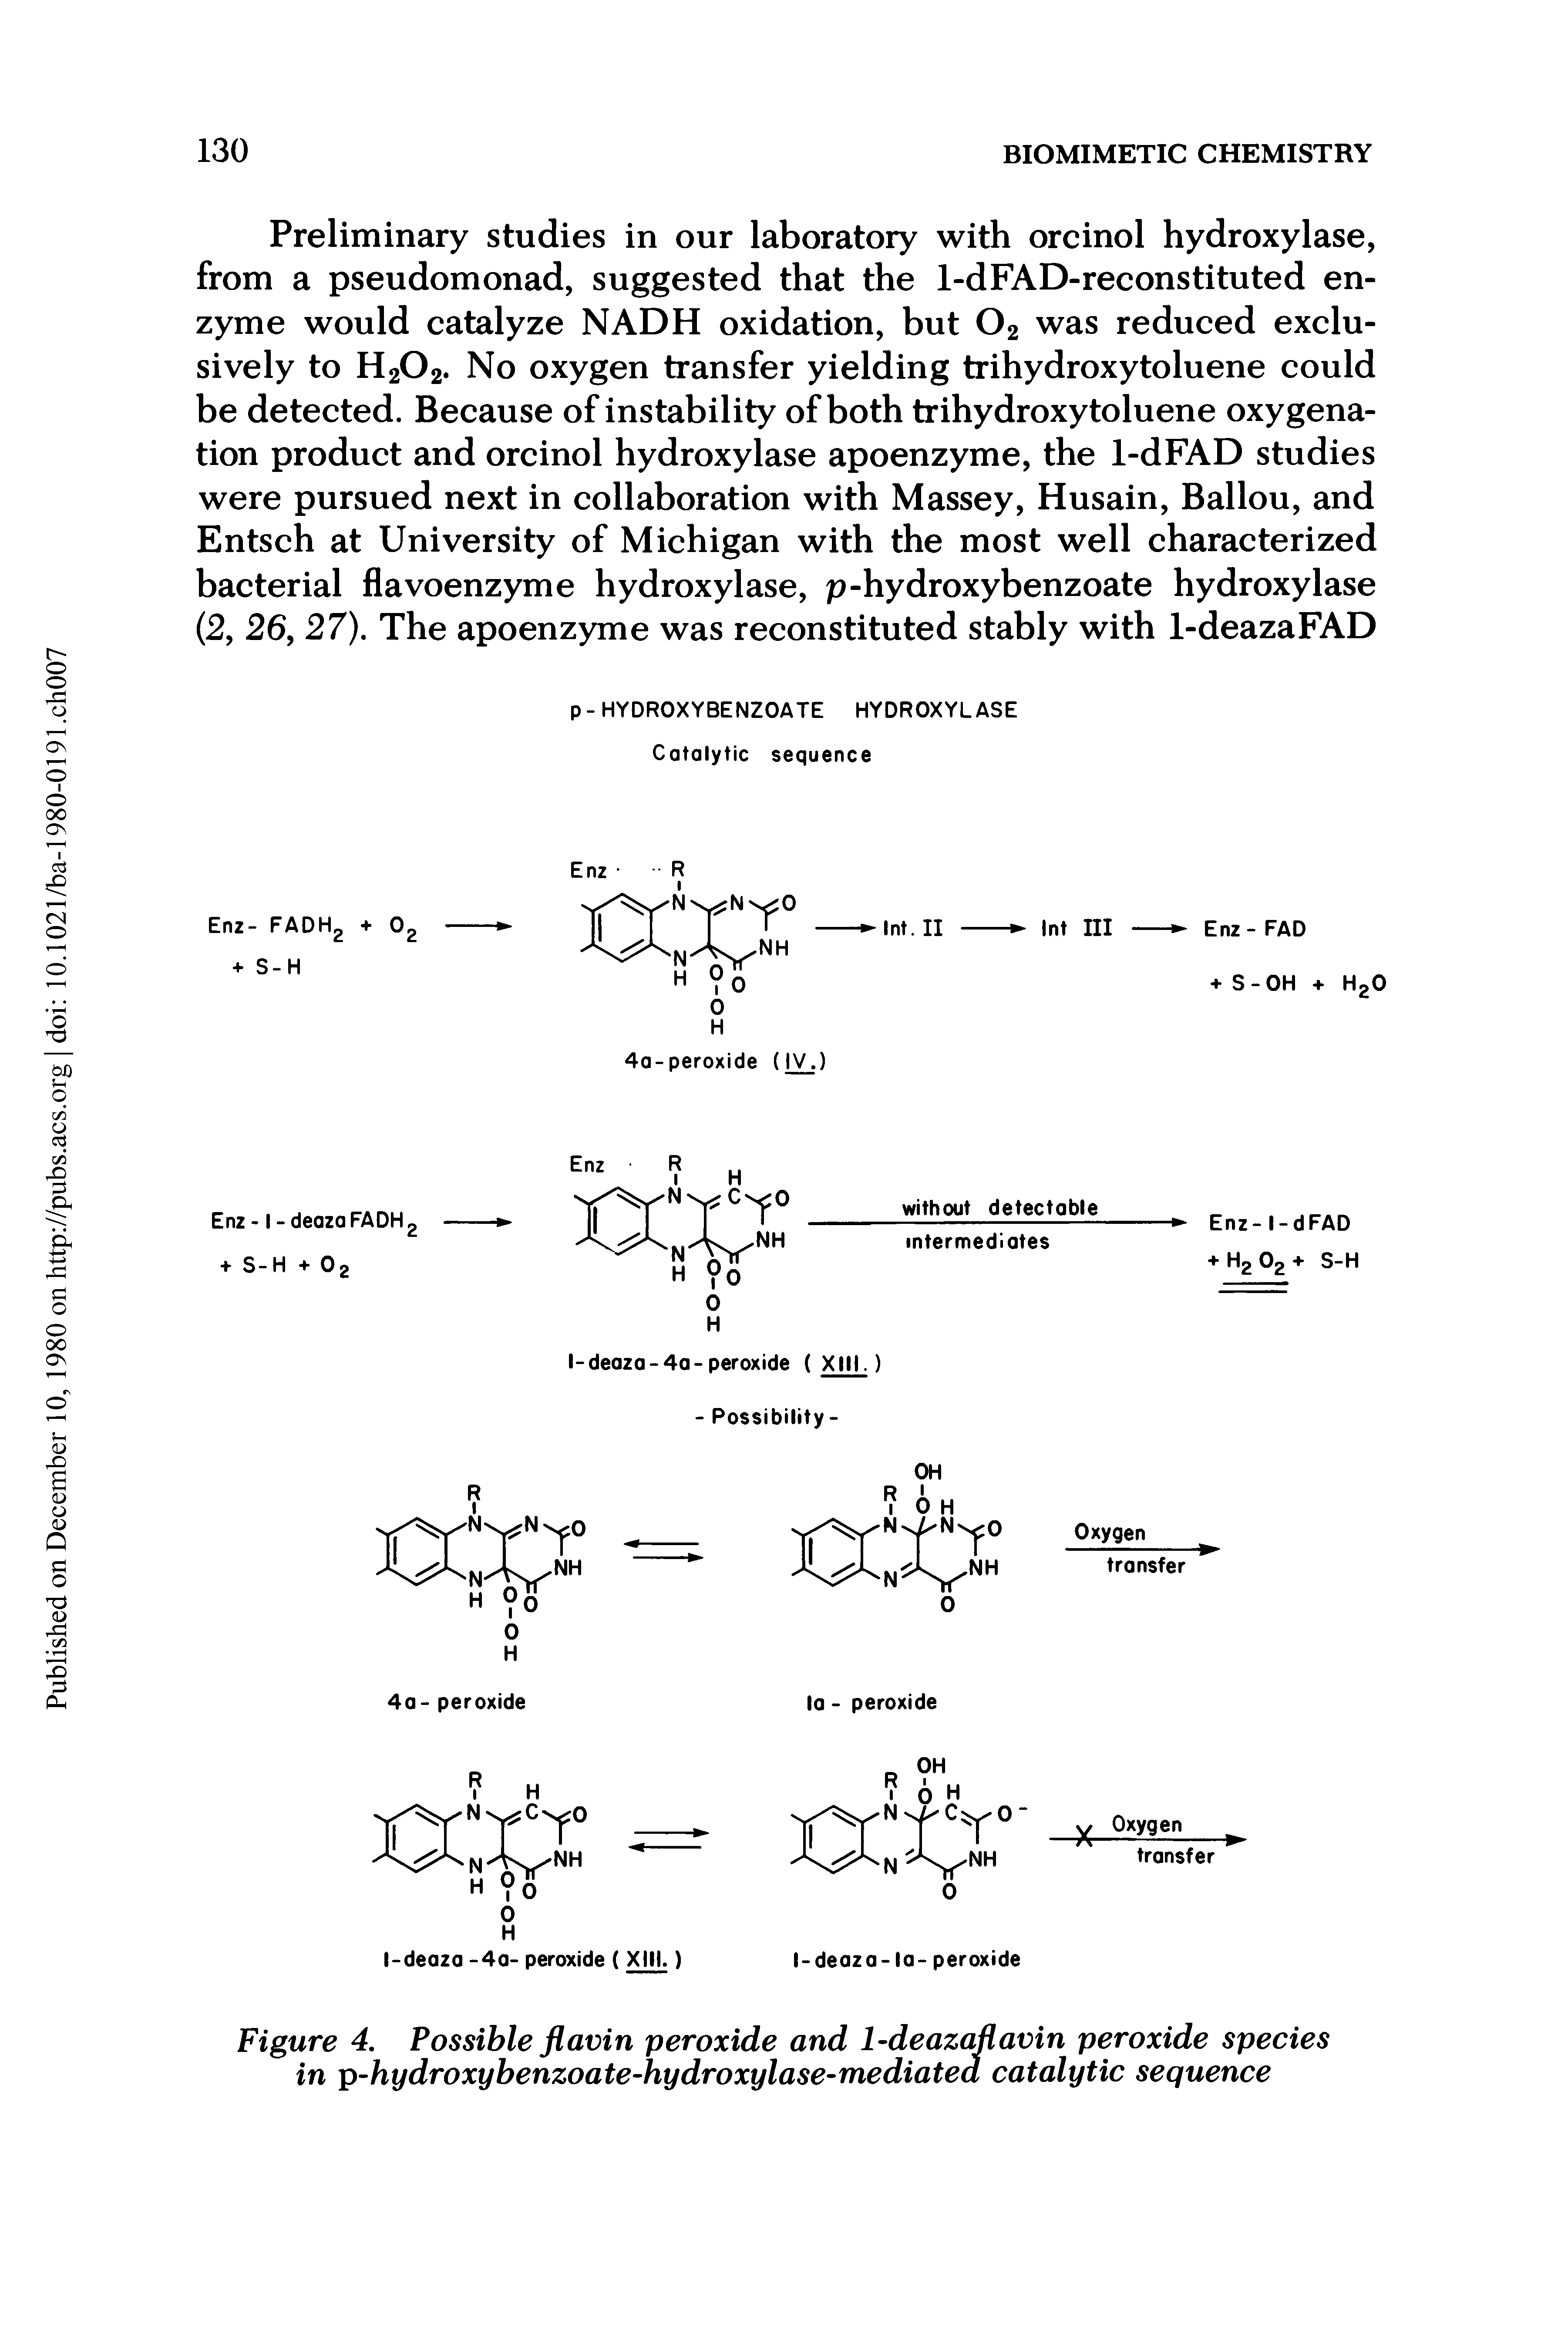 Figure 4. Possible flavin peroxide and 1-deazaflavin peroxide species in p-hydroxybenzoate-hydroxylase-mediatea catalytic sequence...